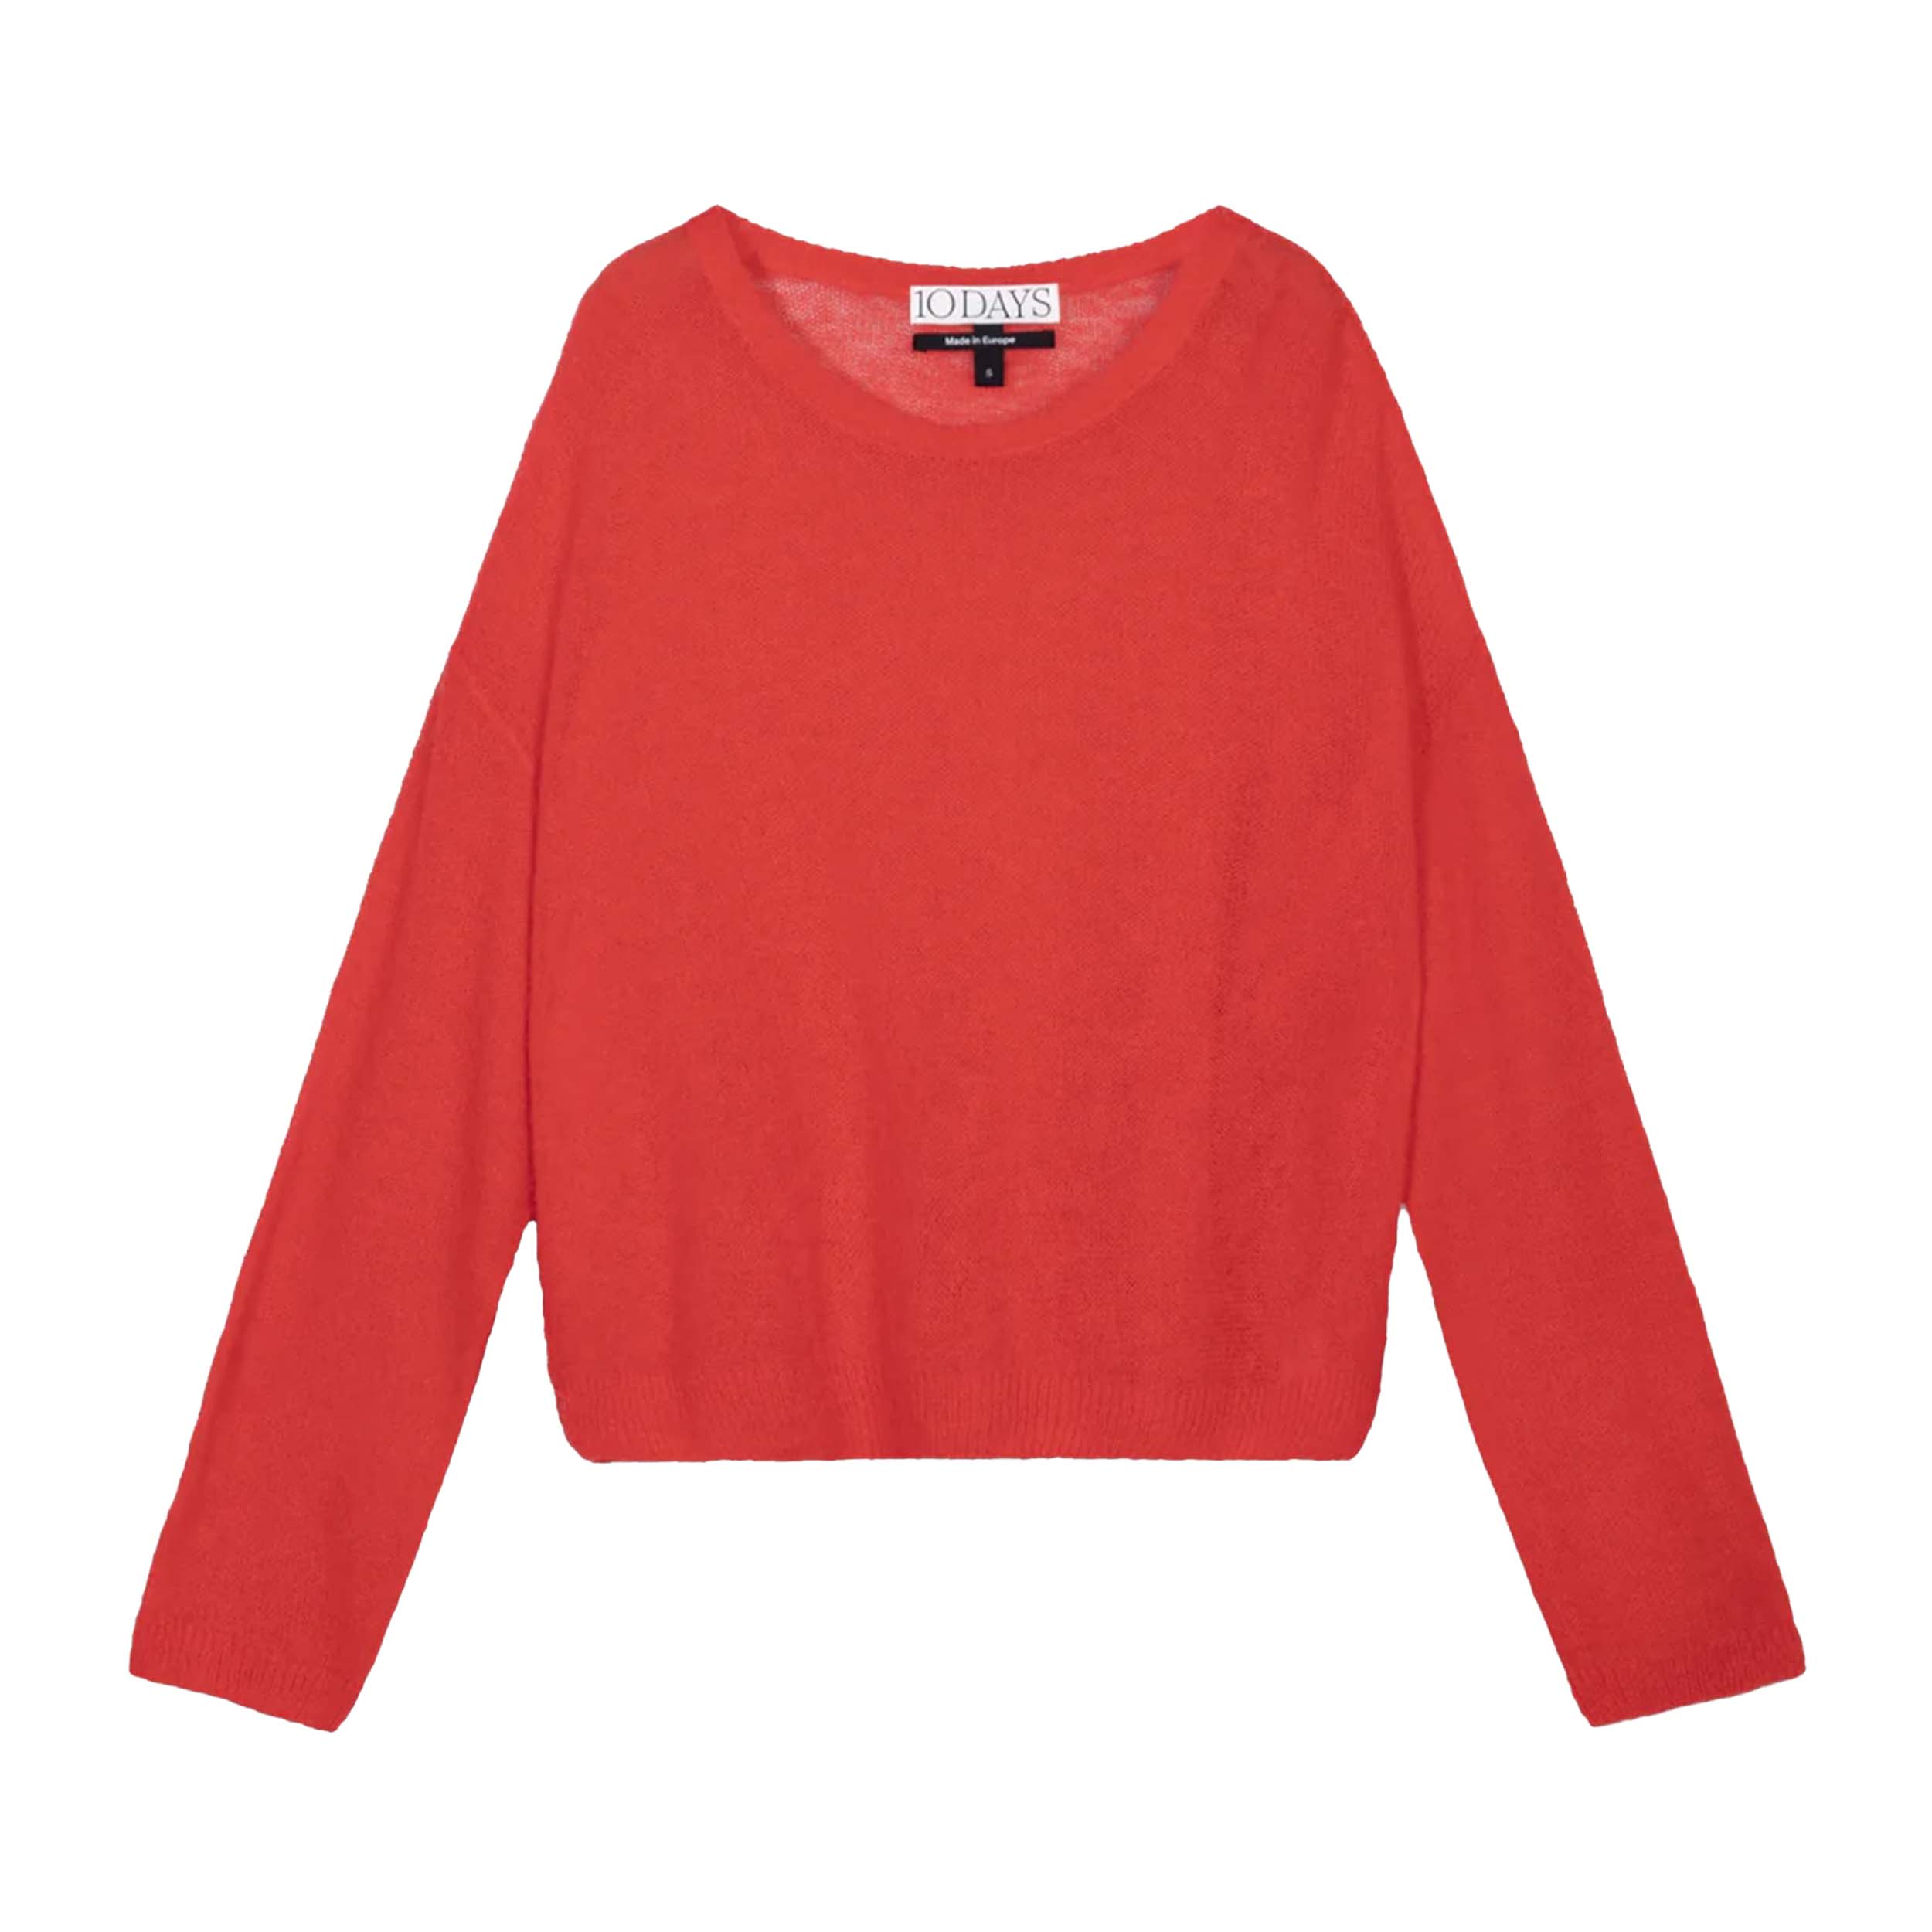 10DAYS 20-618-4202 Sweater Thin Knit Poppy Red